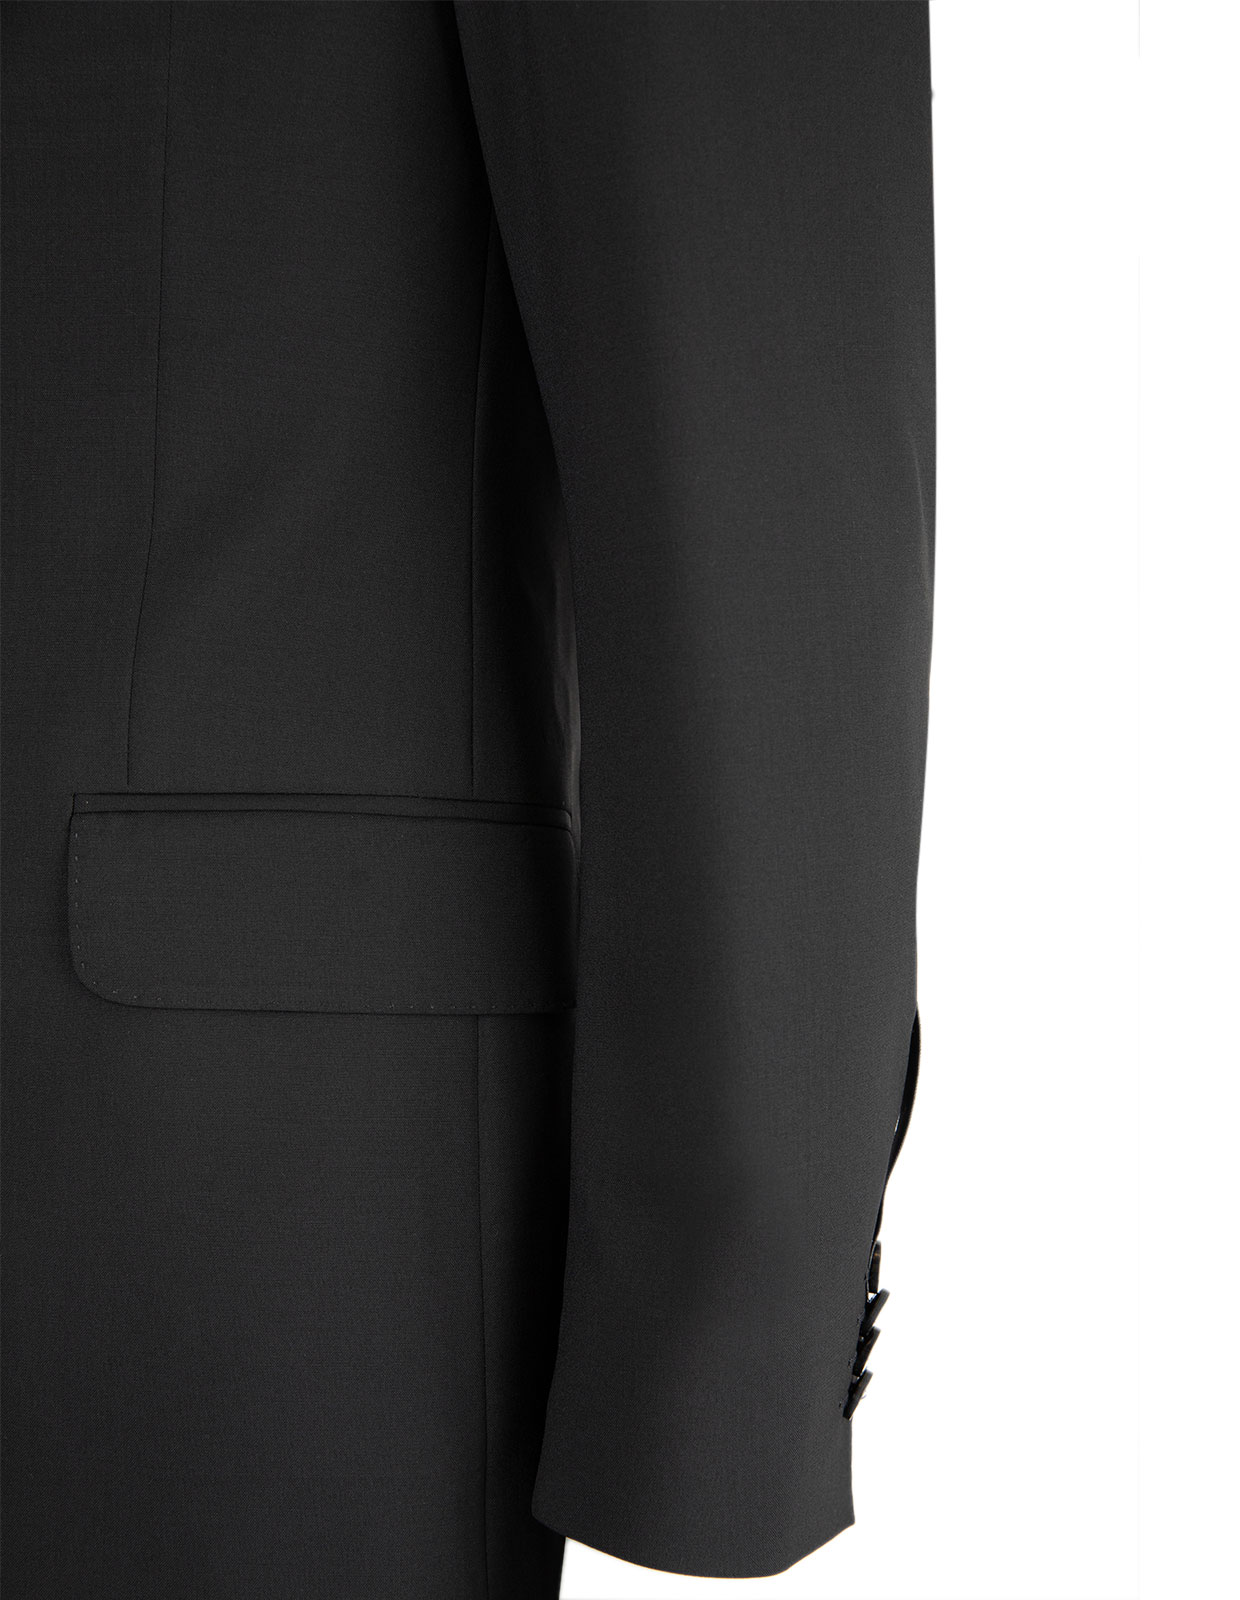 Edmund Suit Jacket Slim Fit Mix & Match Wool Black Stl 154